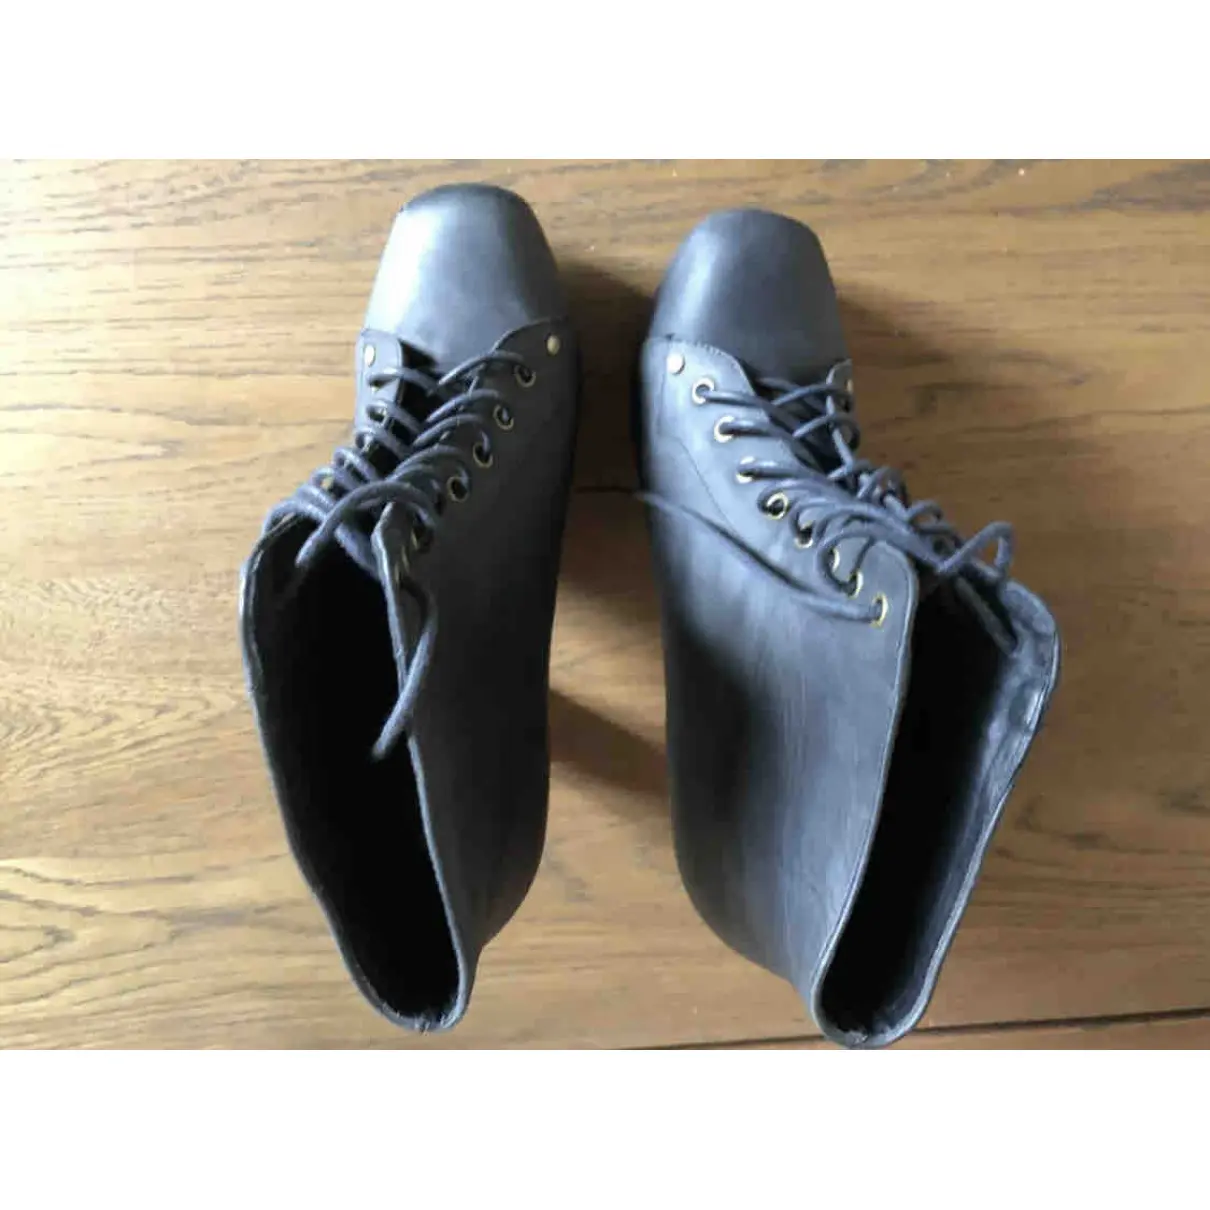 Buy Jeffrey Campbell Leather heels online